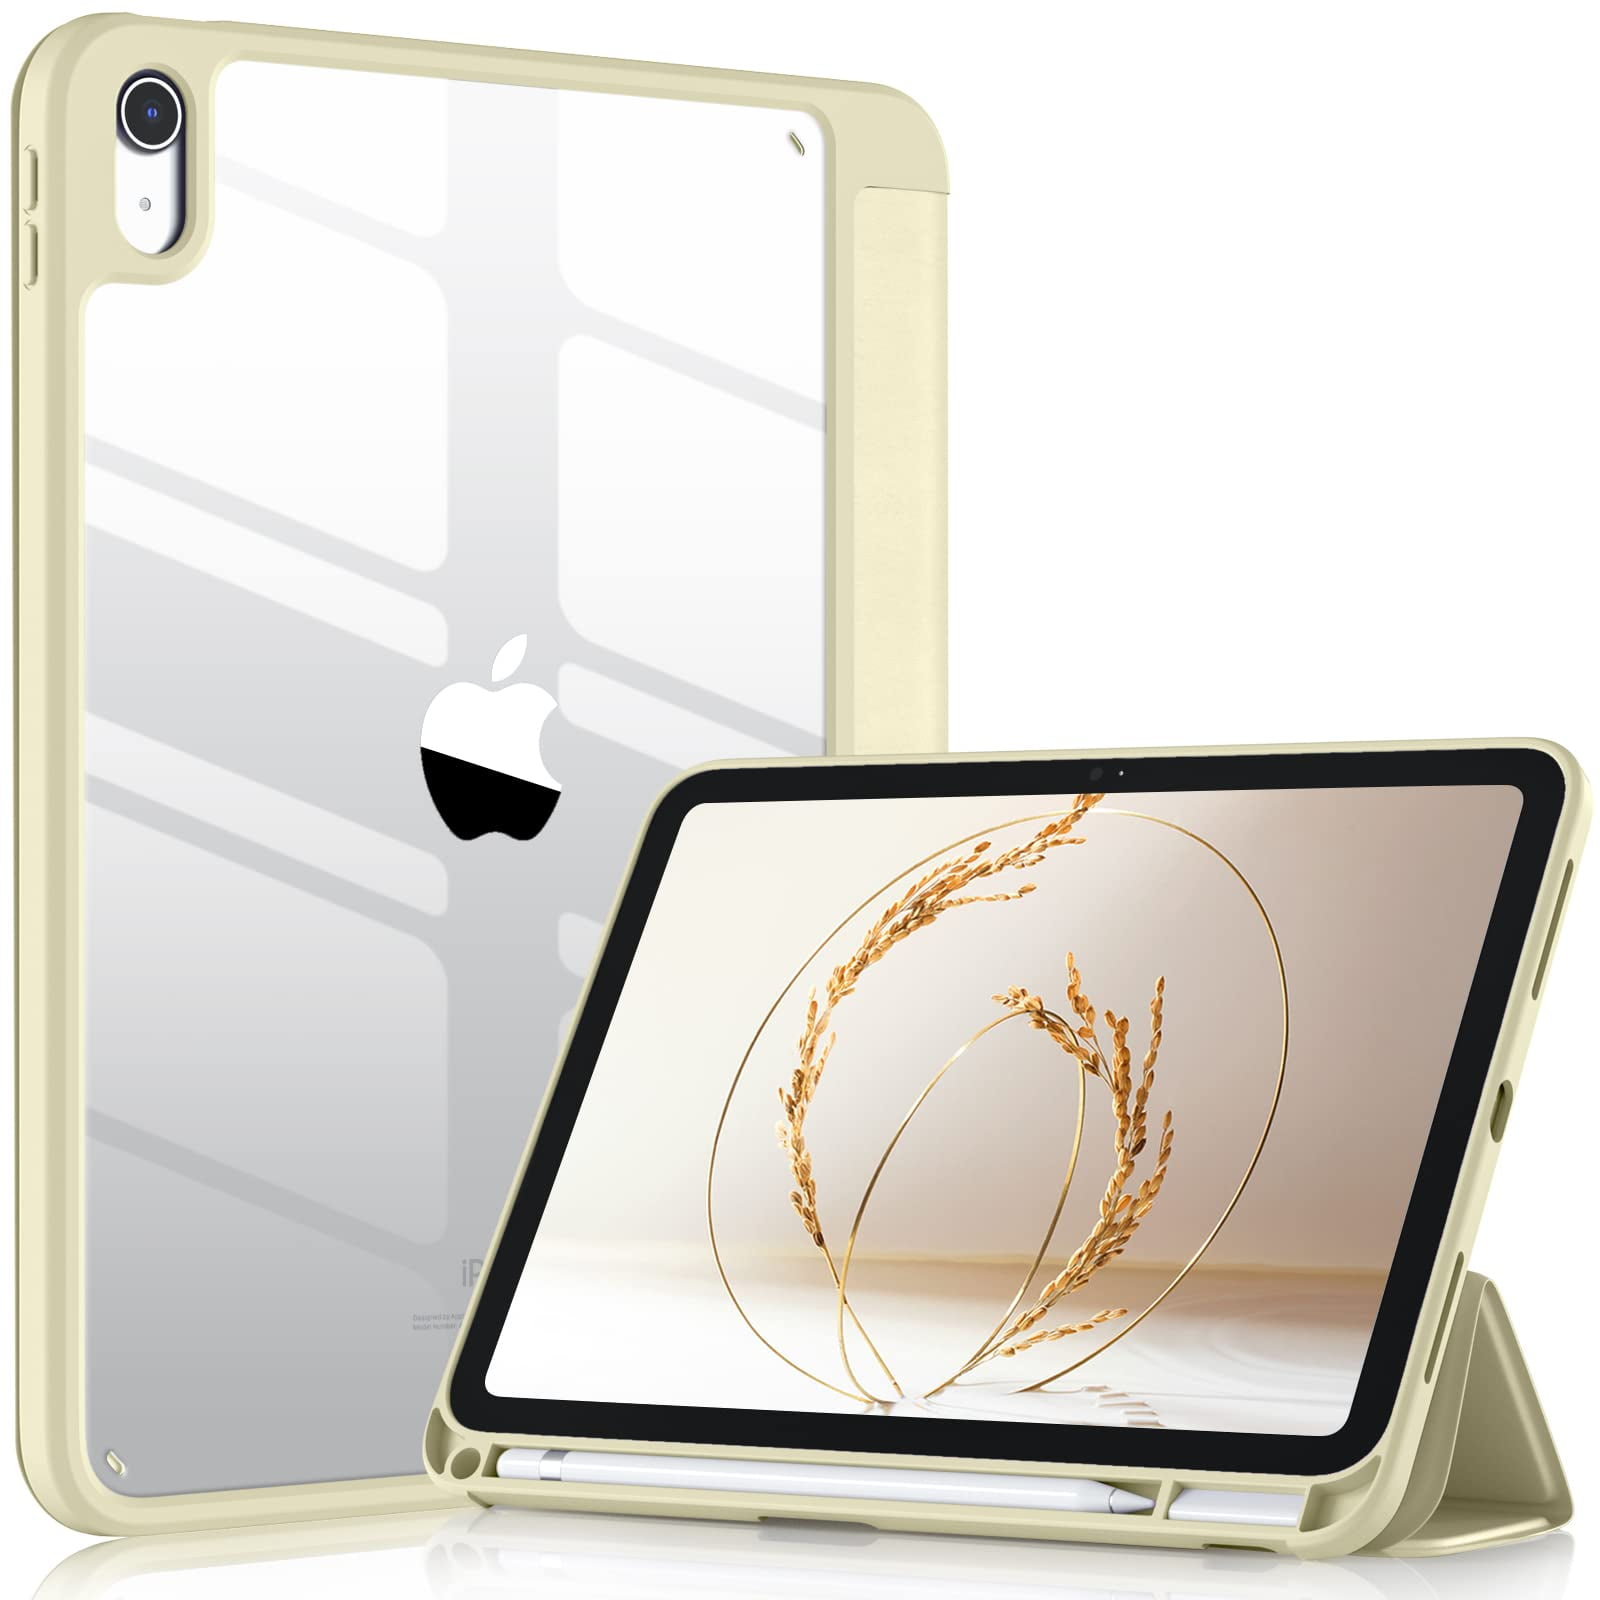 Étui iPad Air 1 Book Case Sleeve With Cutout For Apple Pencil - Rose Gold